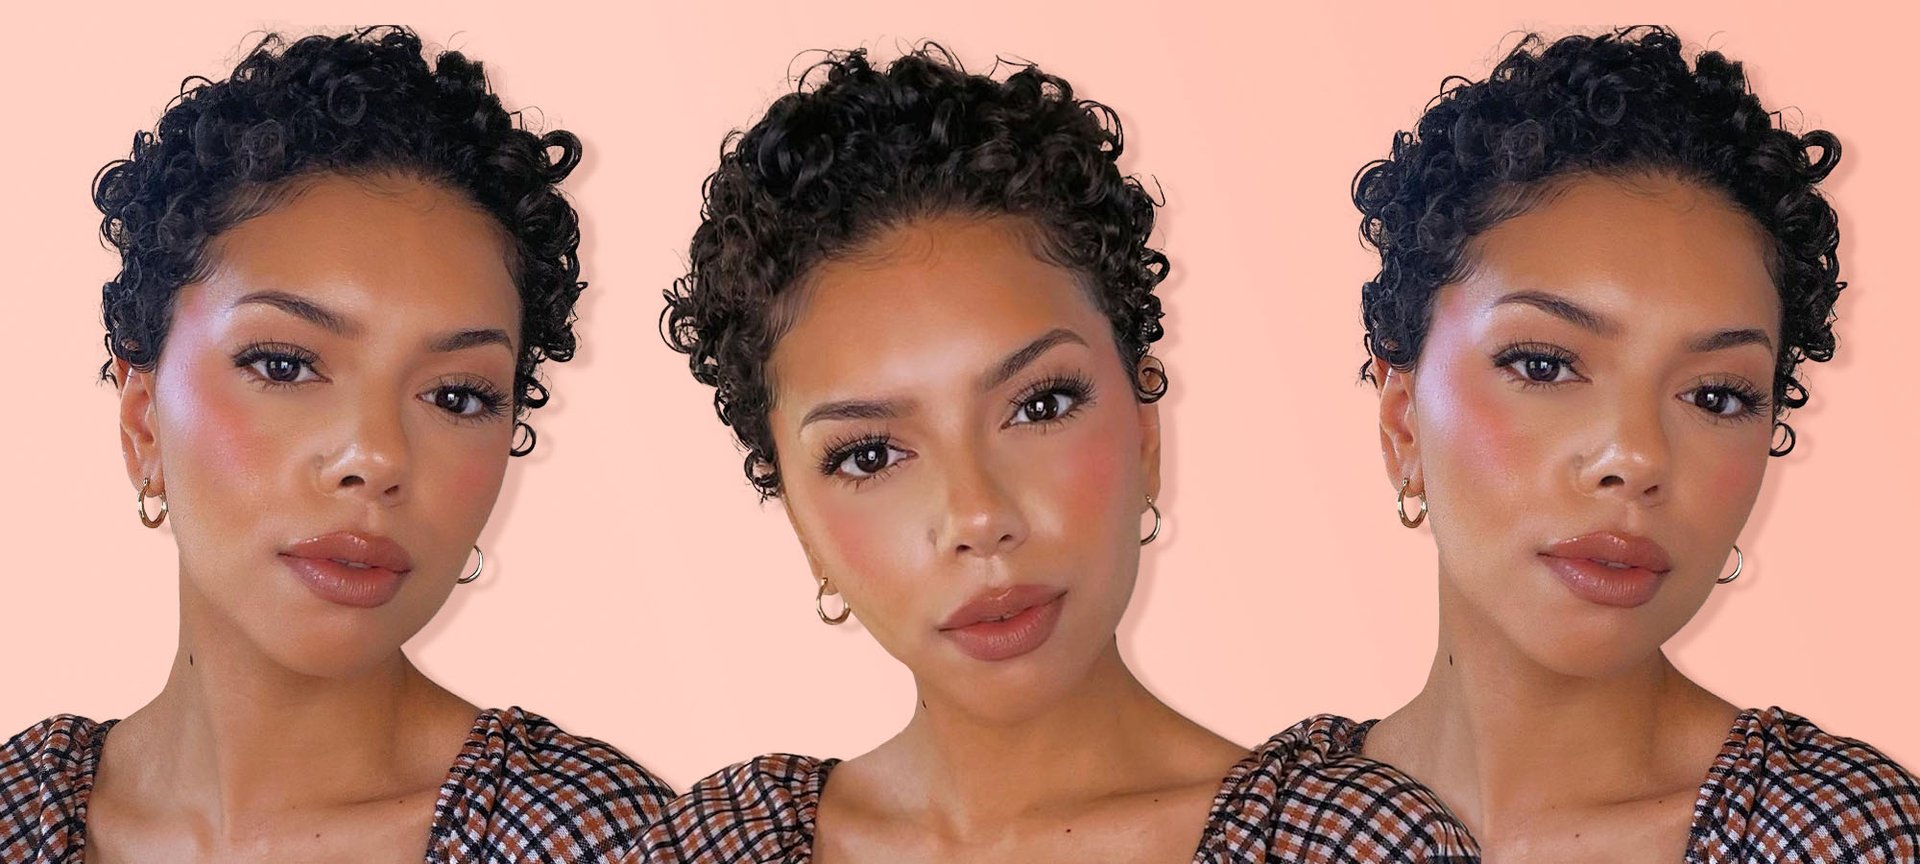 How to Grow Out Short, Curly Hair - L'Oréal Paris